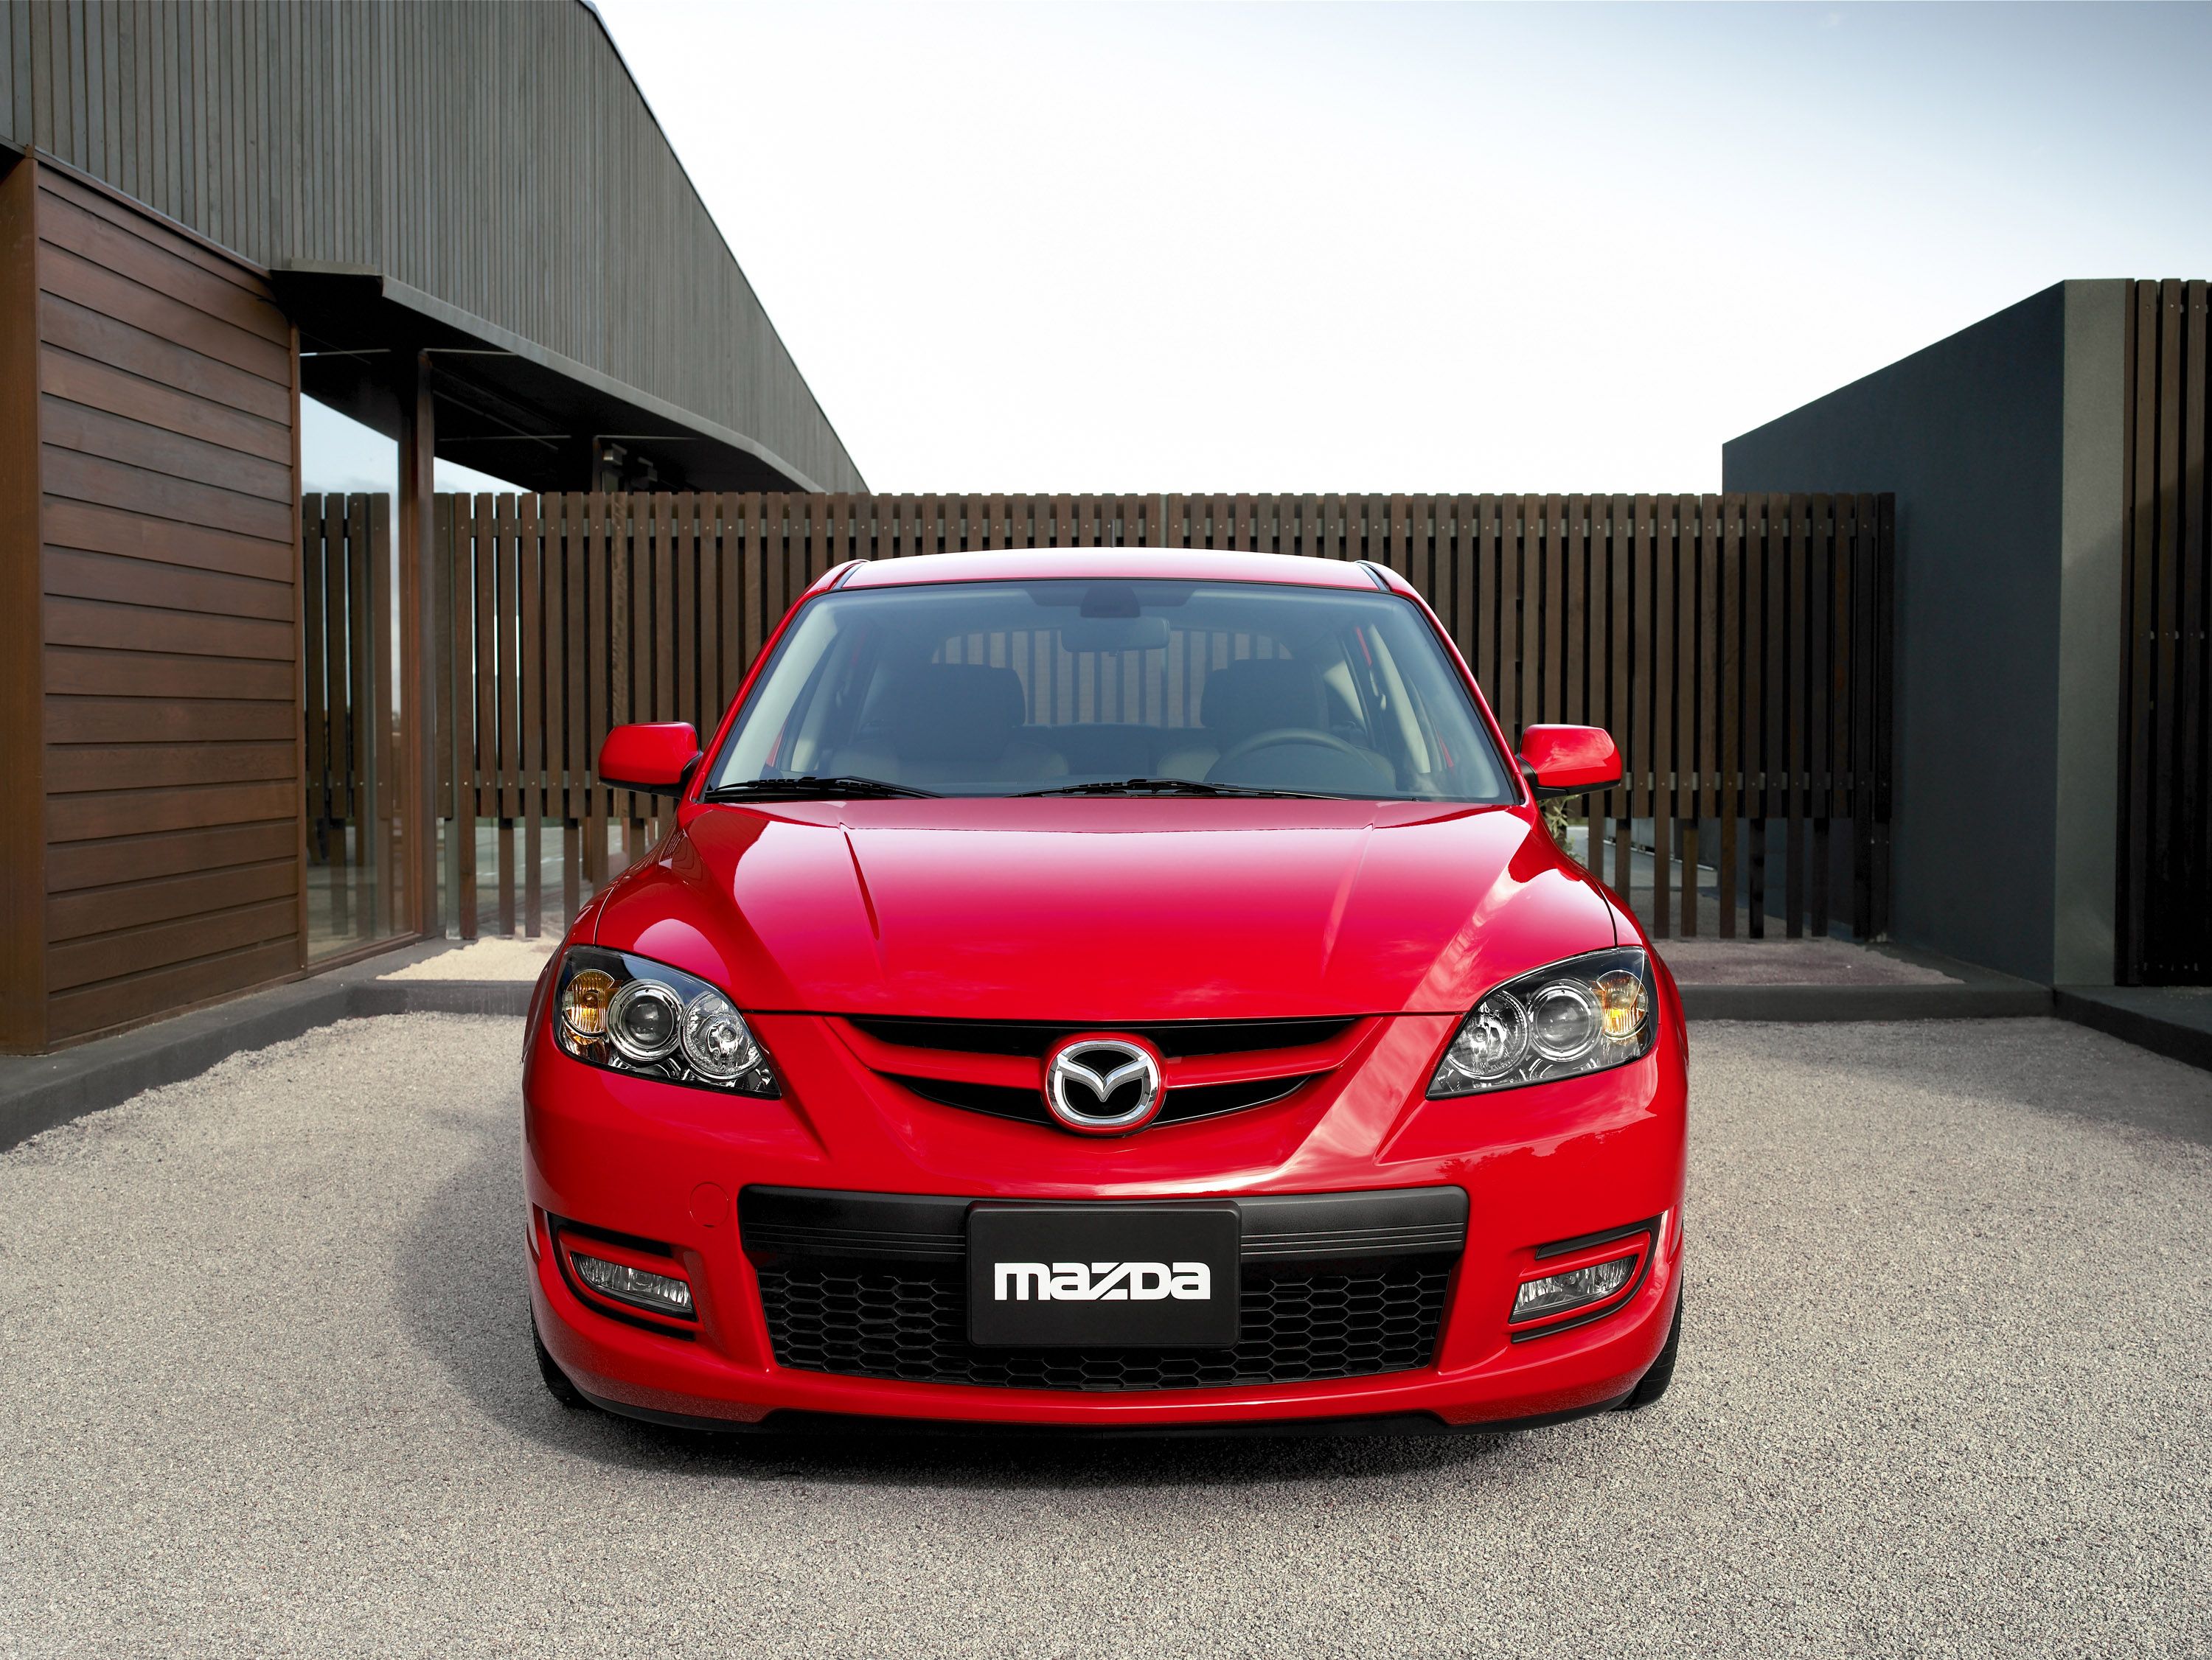 MazdaSpeed3